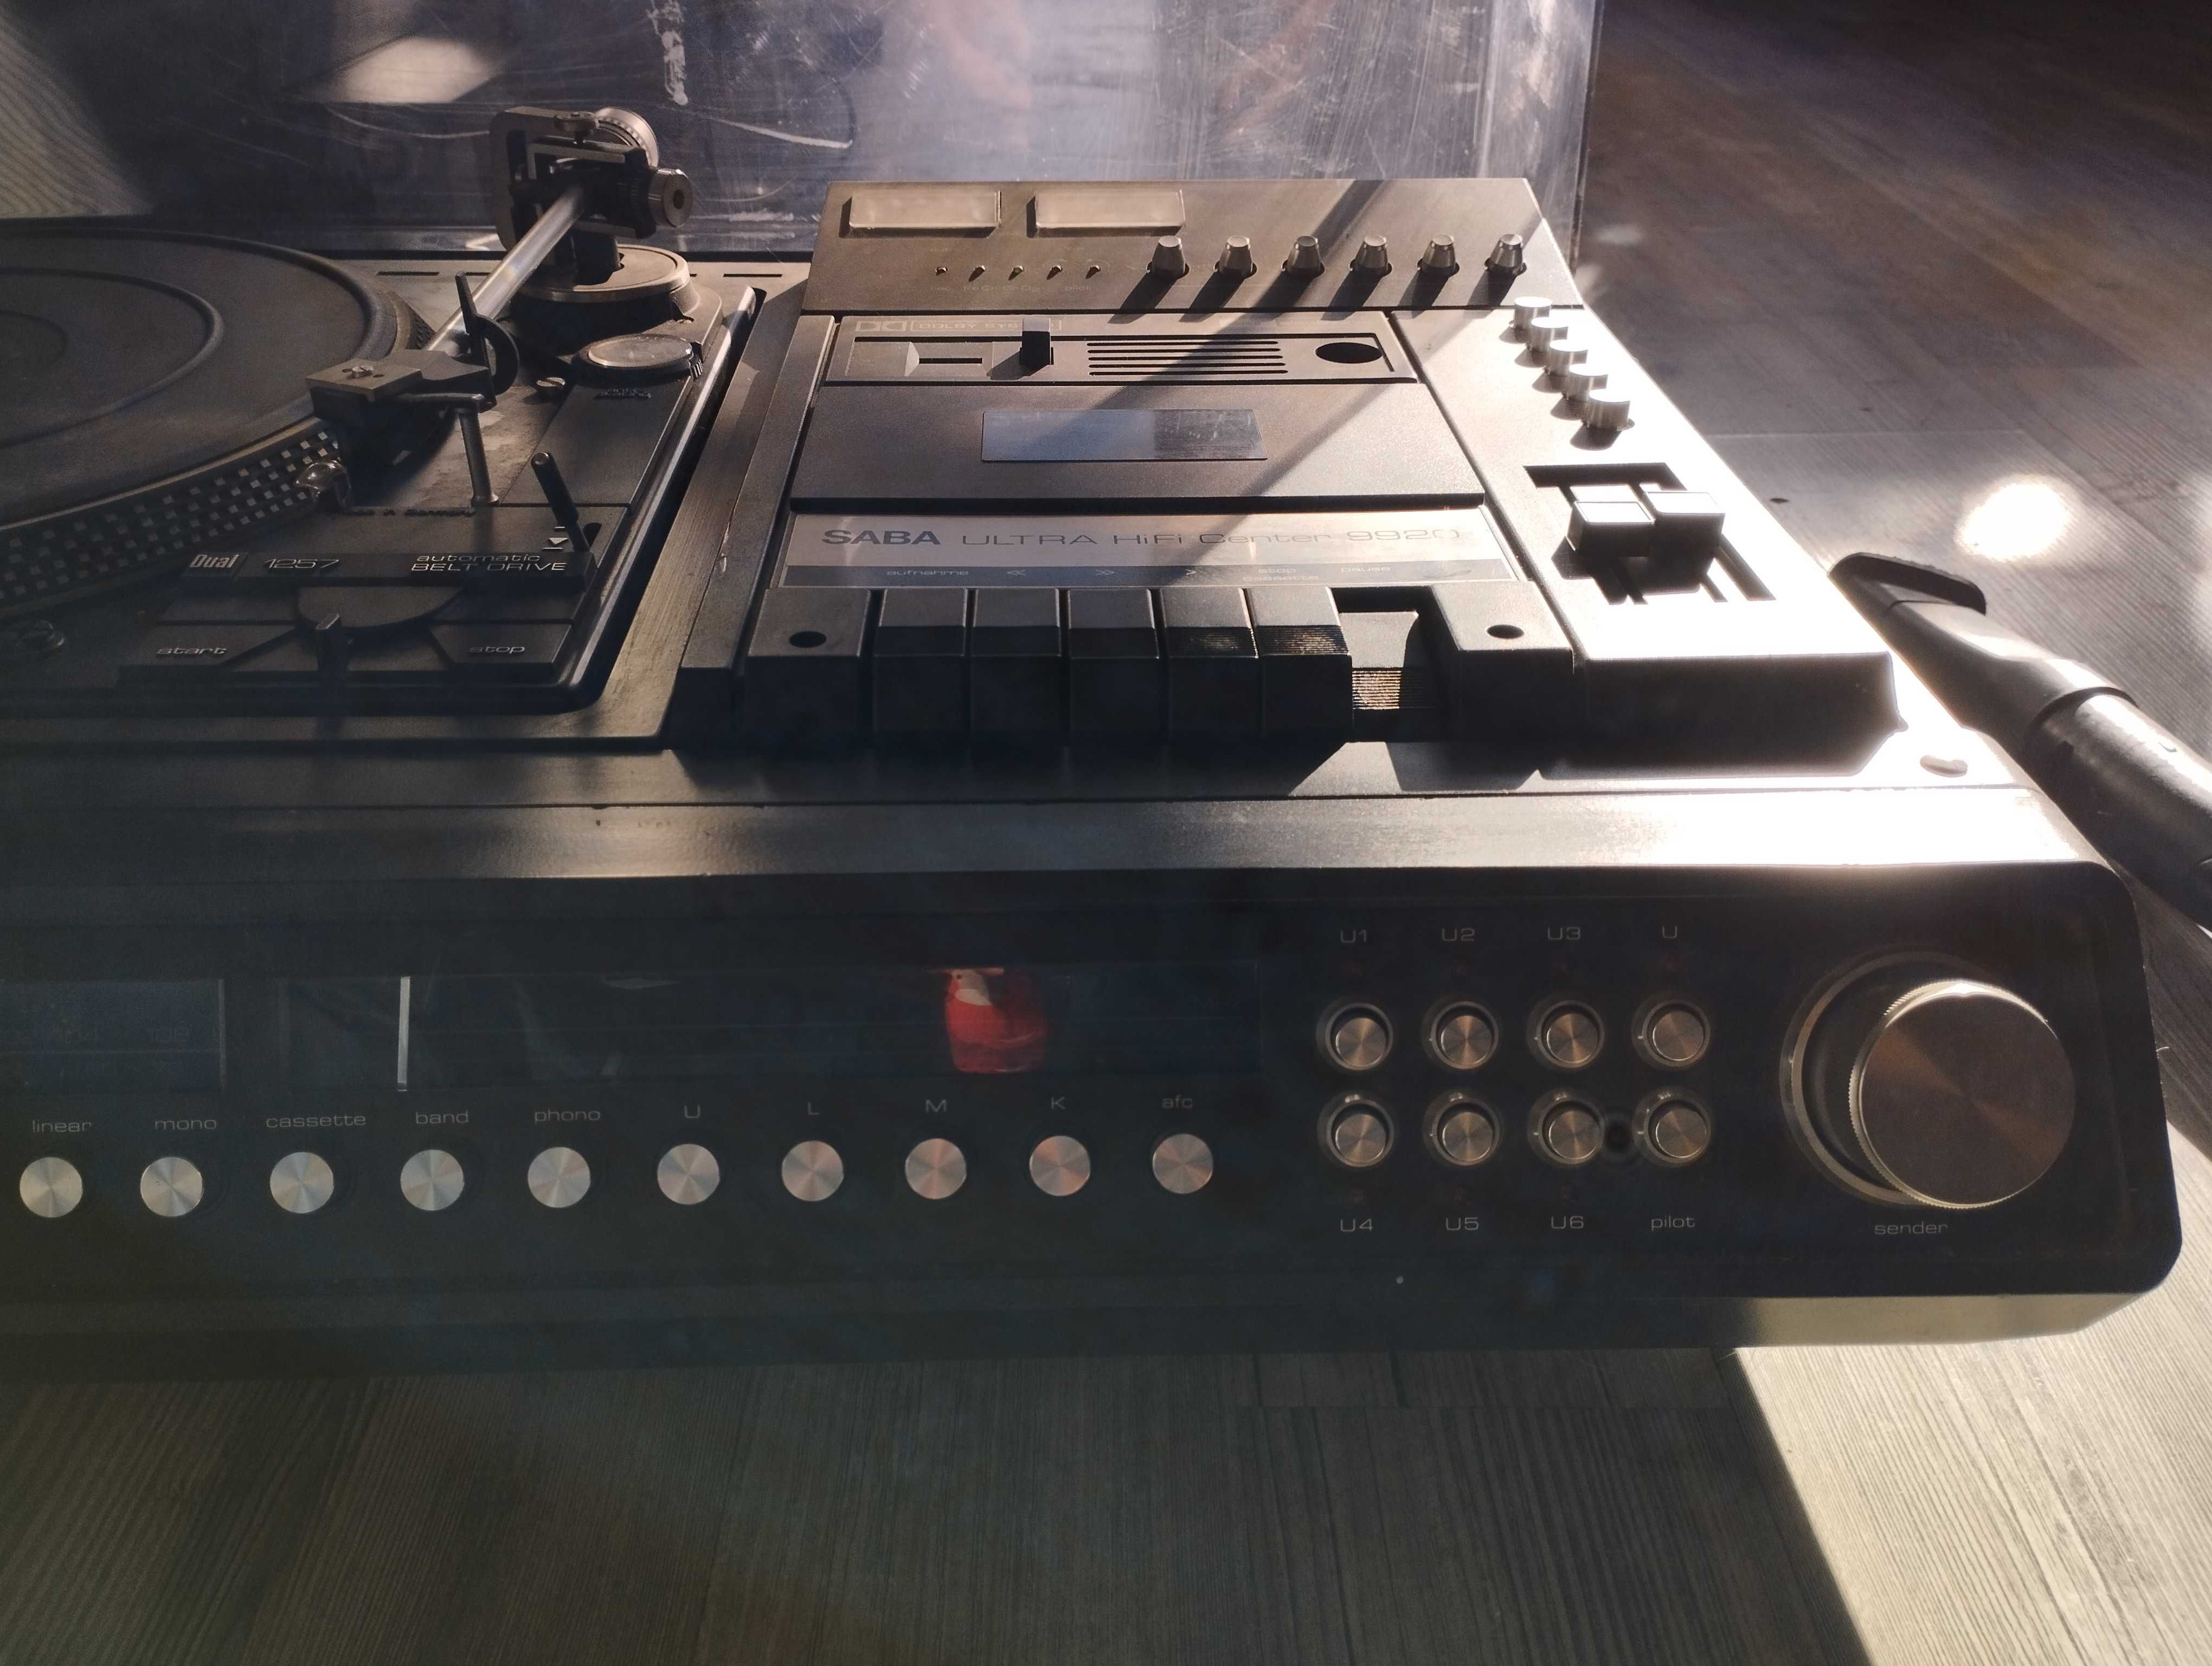 Saba ultra hifi center 9920 аудио система с грамофон, касетофон, радио